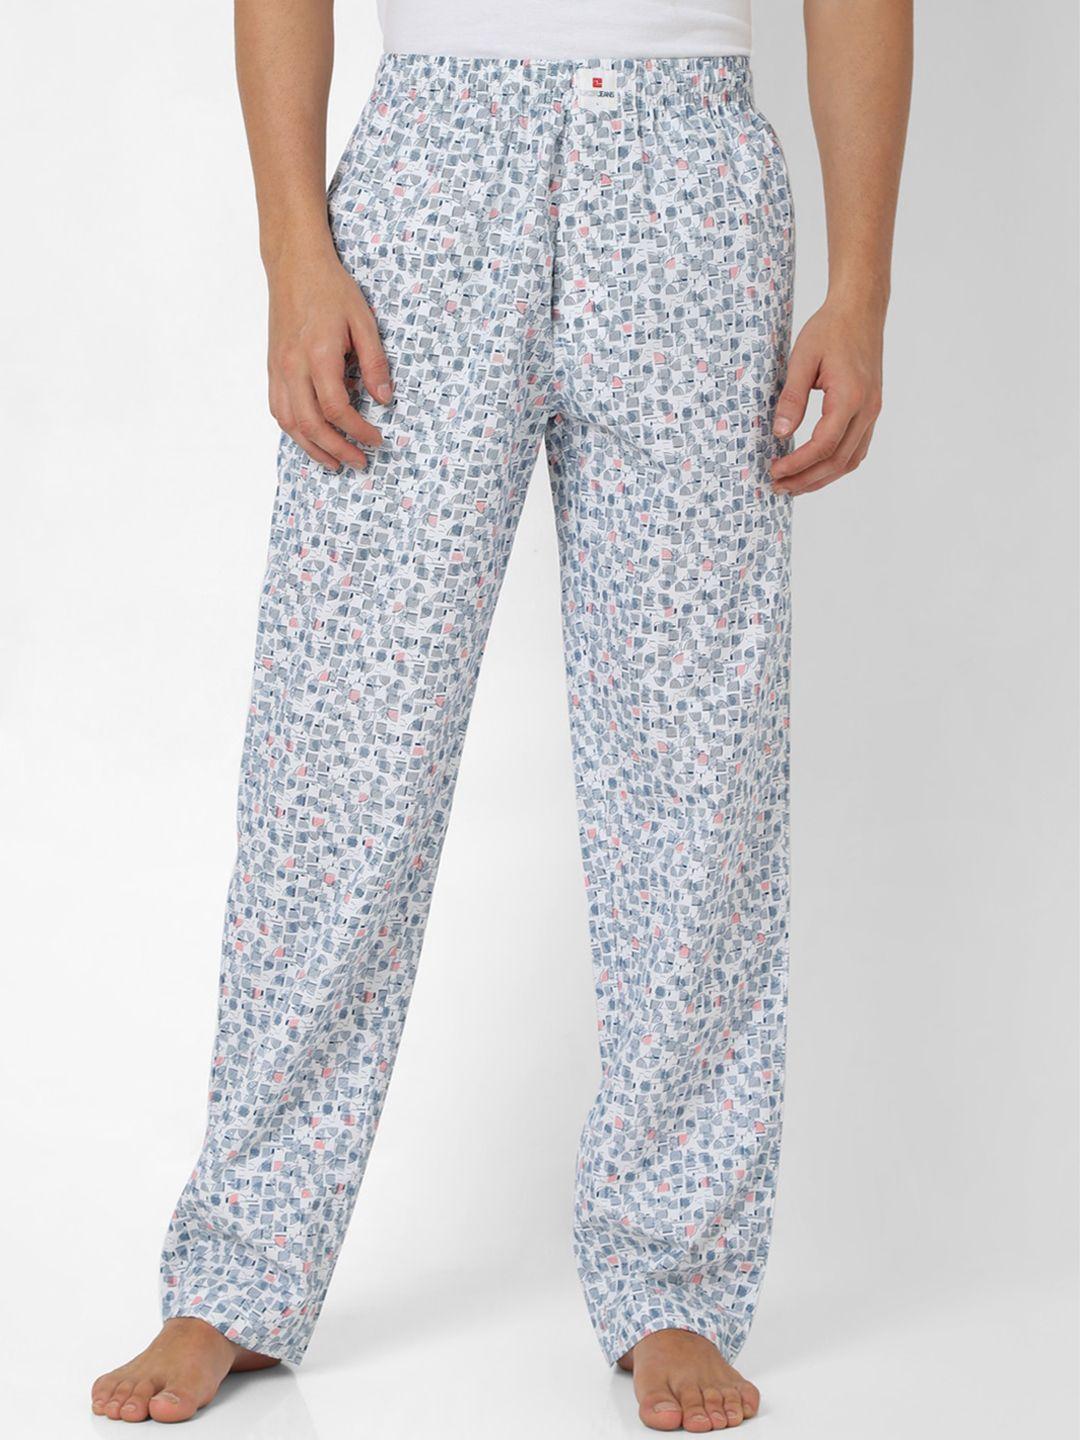 underjeans-by-spykar-men-white-printed-lounge-pants